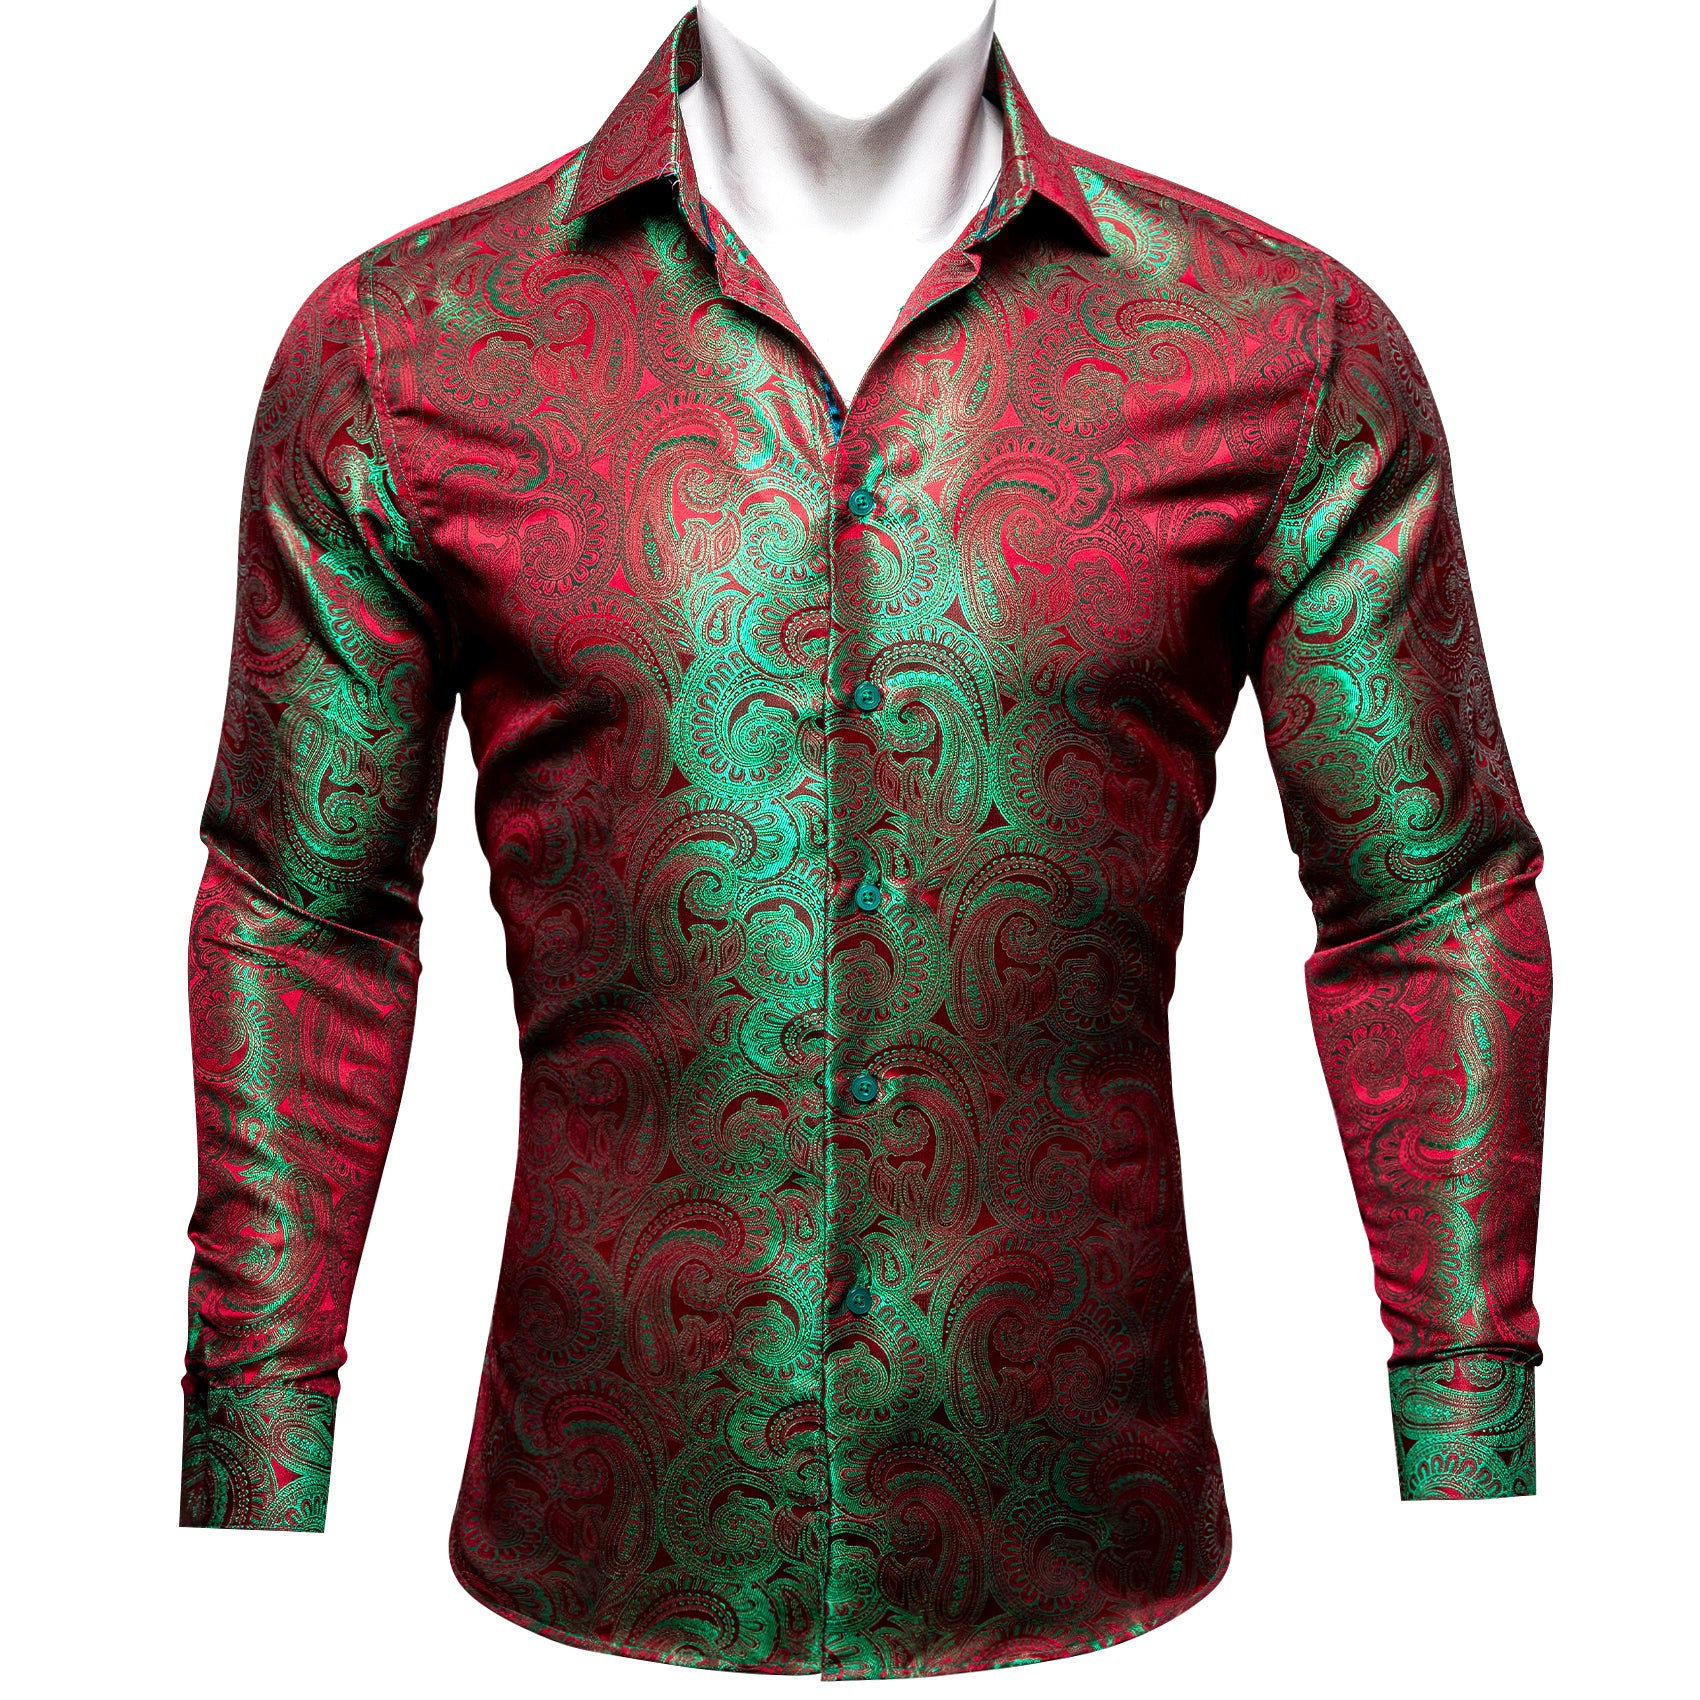 Barry.wang Button Down Shirt Green Red Silk Paisley Men's Shirt